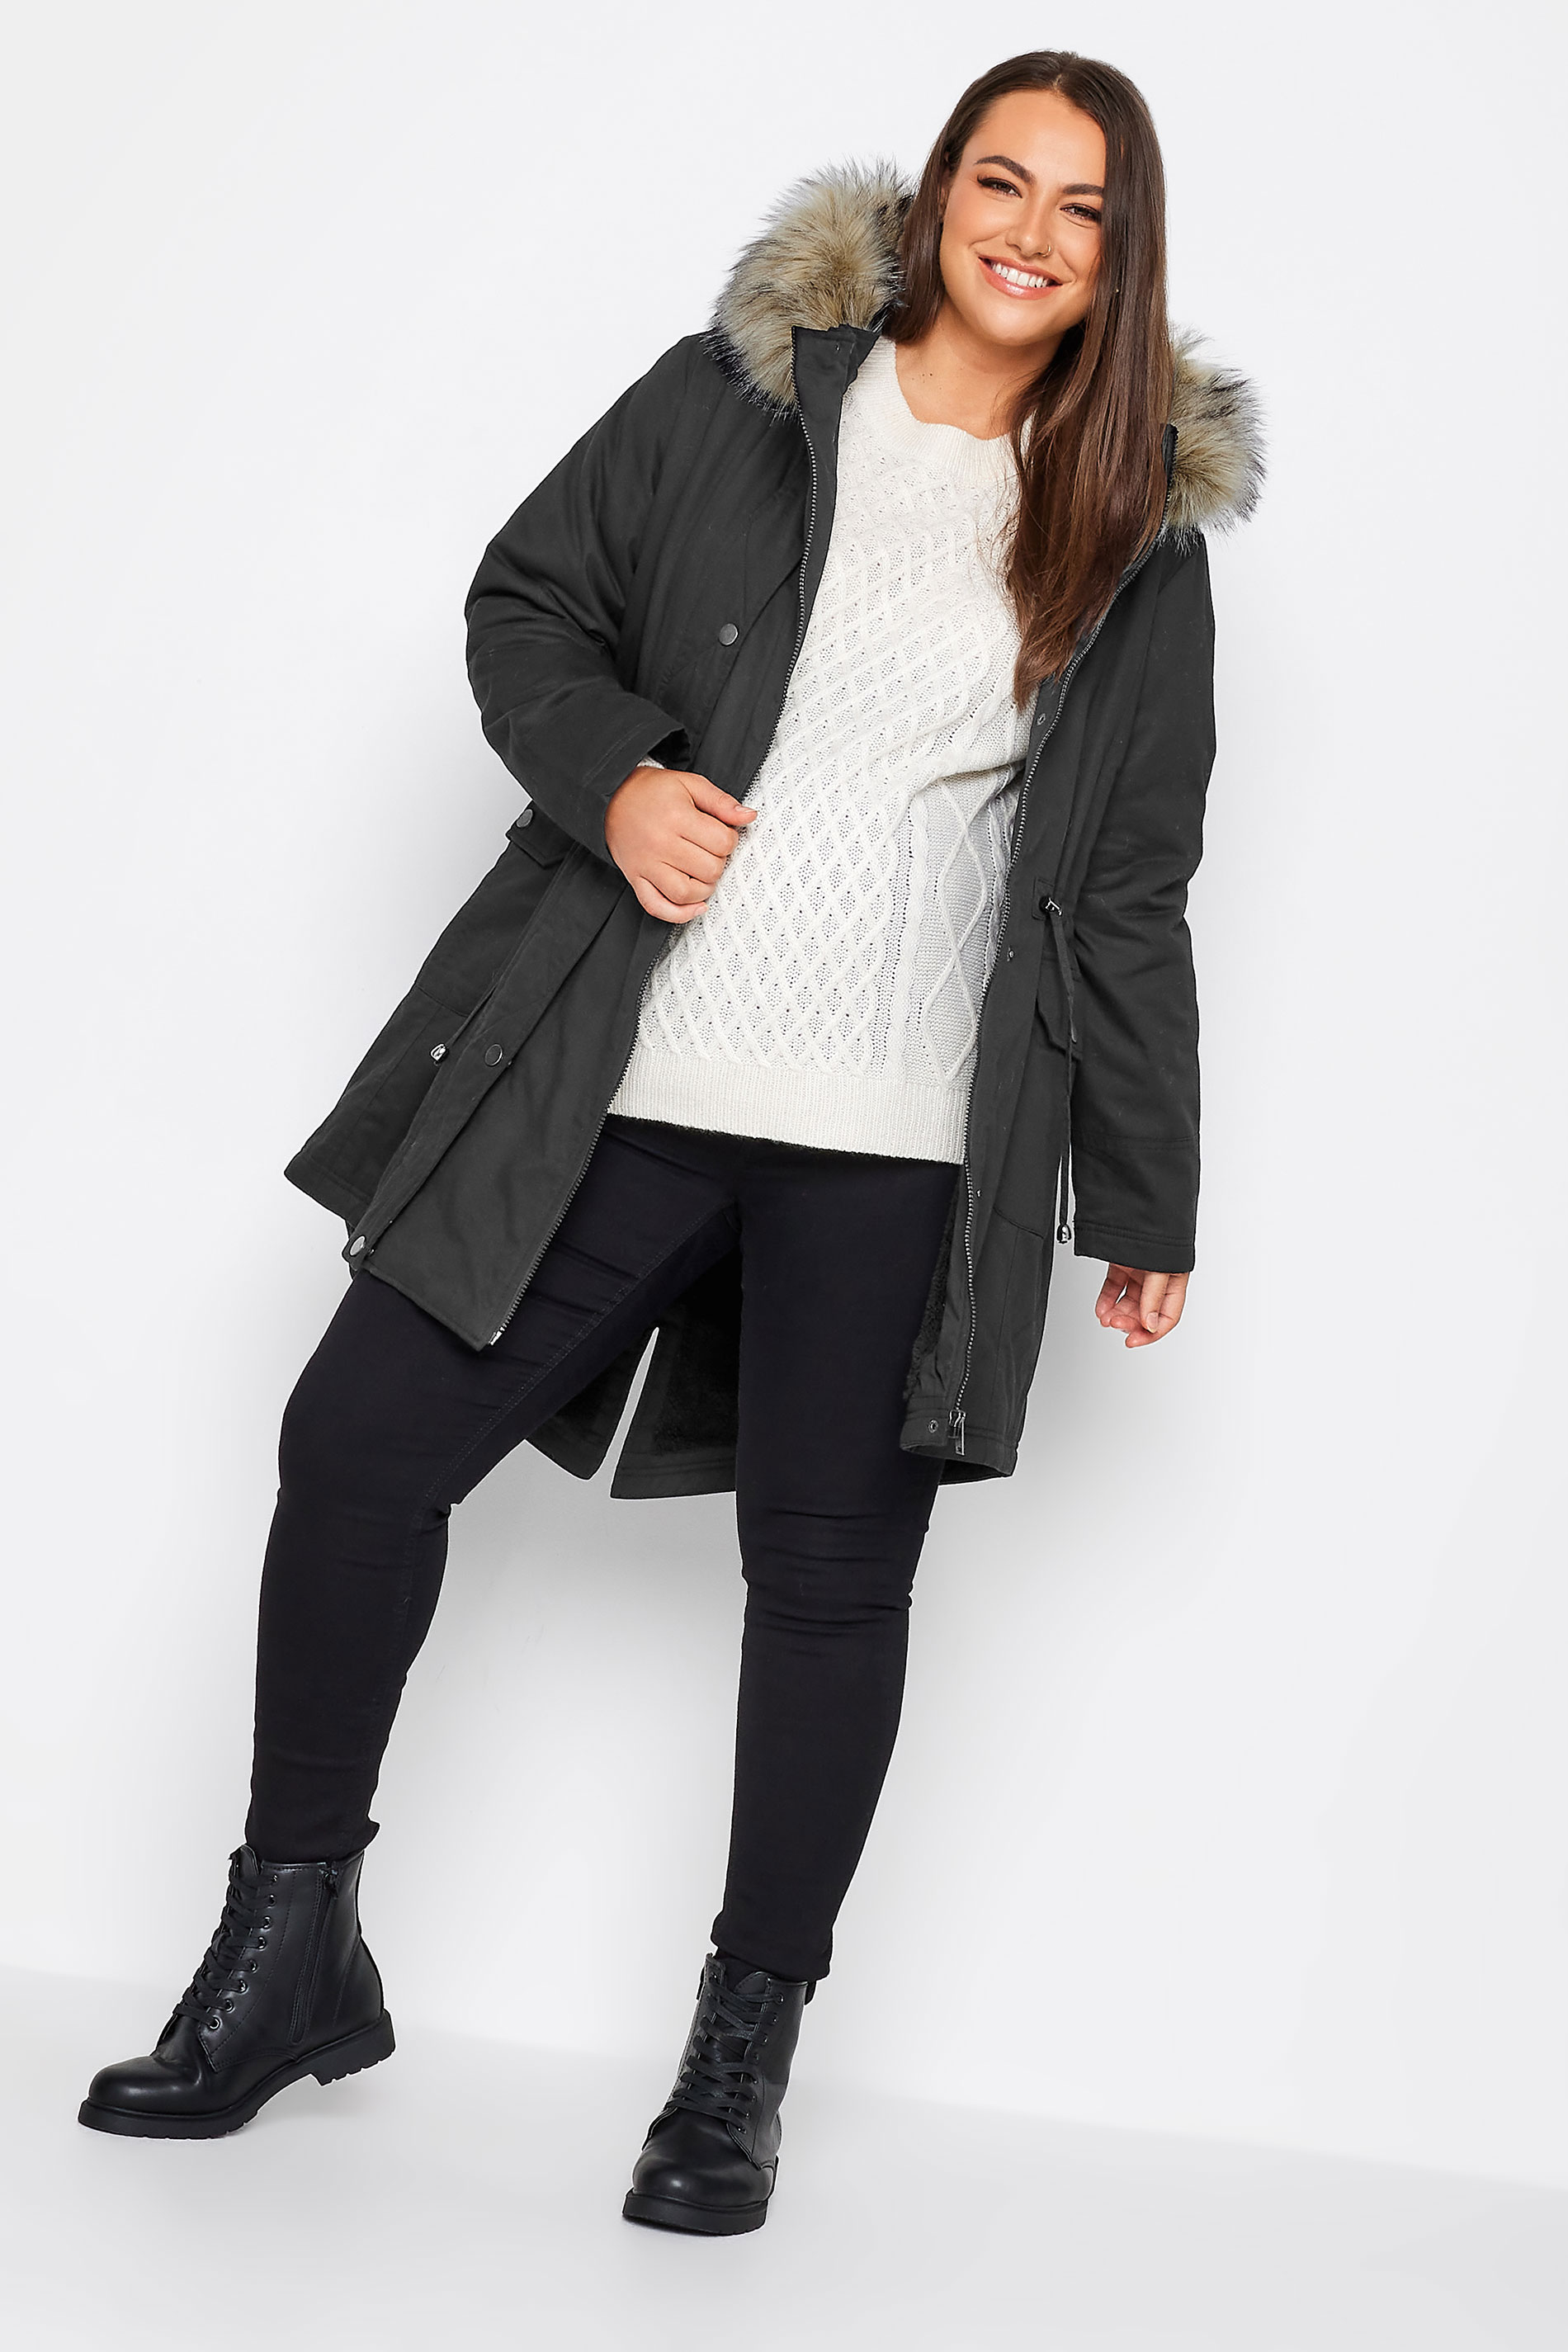 BUMP IT UP MATERNITY Plus Size Curve Black Parka Coat | Yours Clothing  2